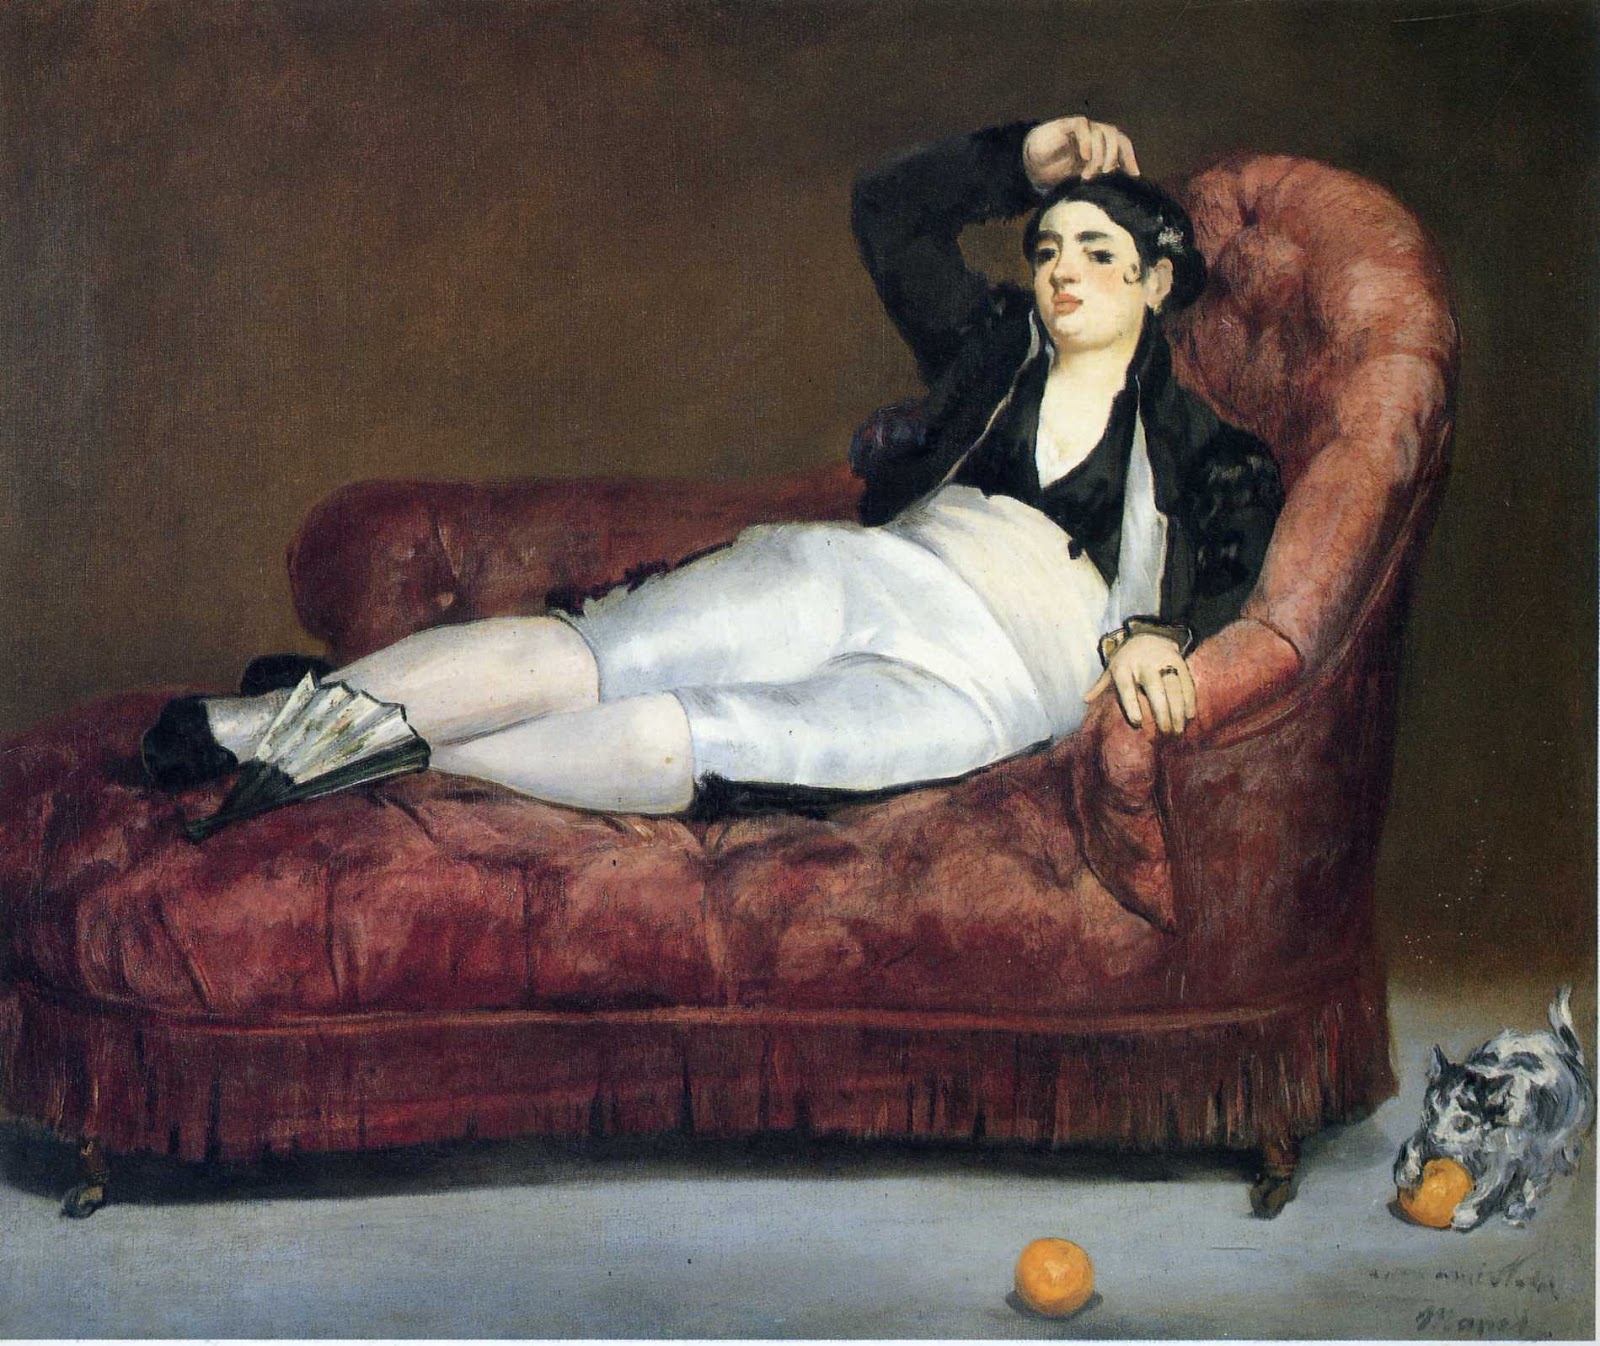 Edouard+Manet-1832-1883 (130).jpg